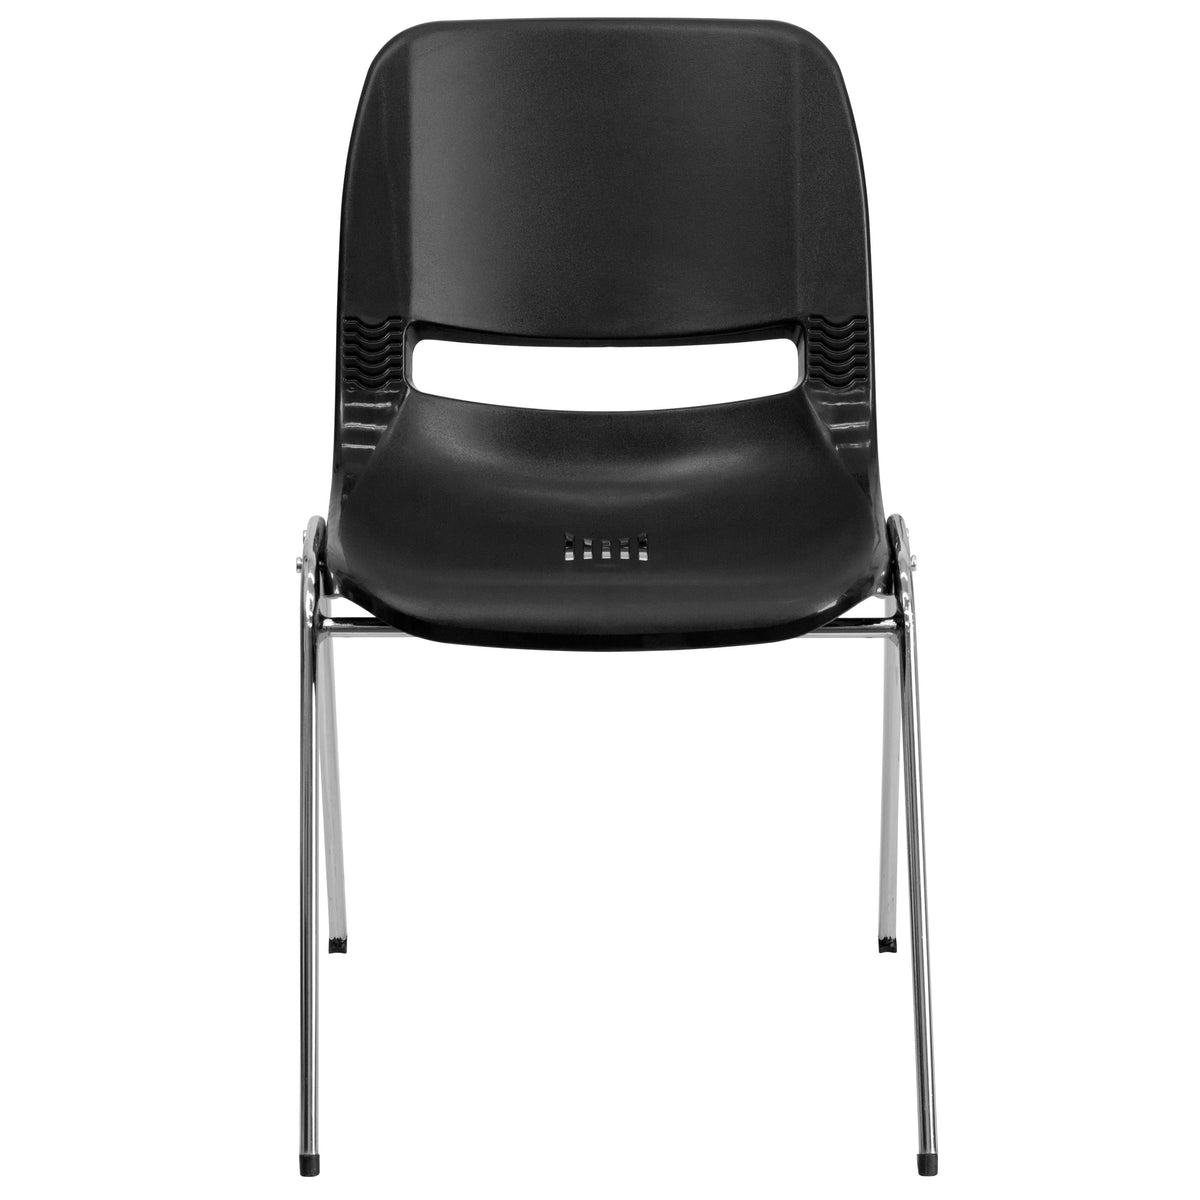 Black Plastic/Chrome Frame |#| 440 lb. Rated Kid's Black Ergonomic Stack Chair - Chrome Frame-14inch Seat Height